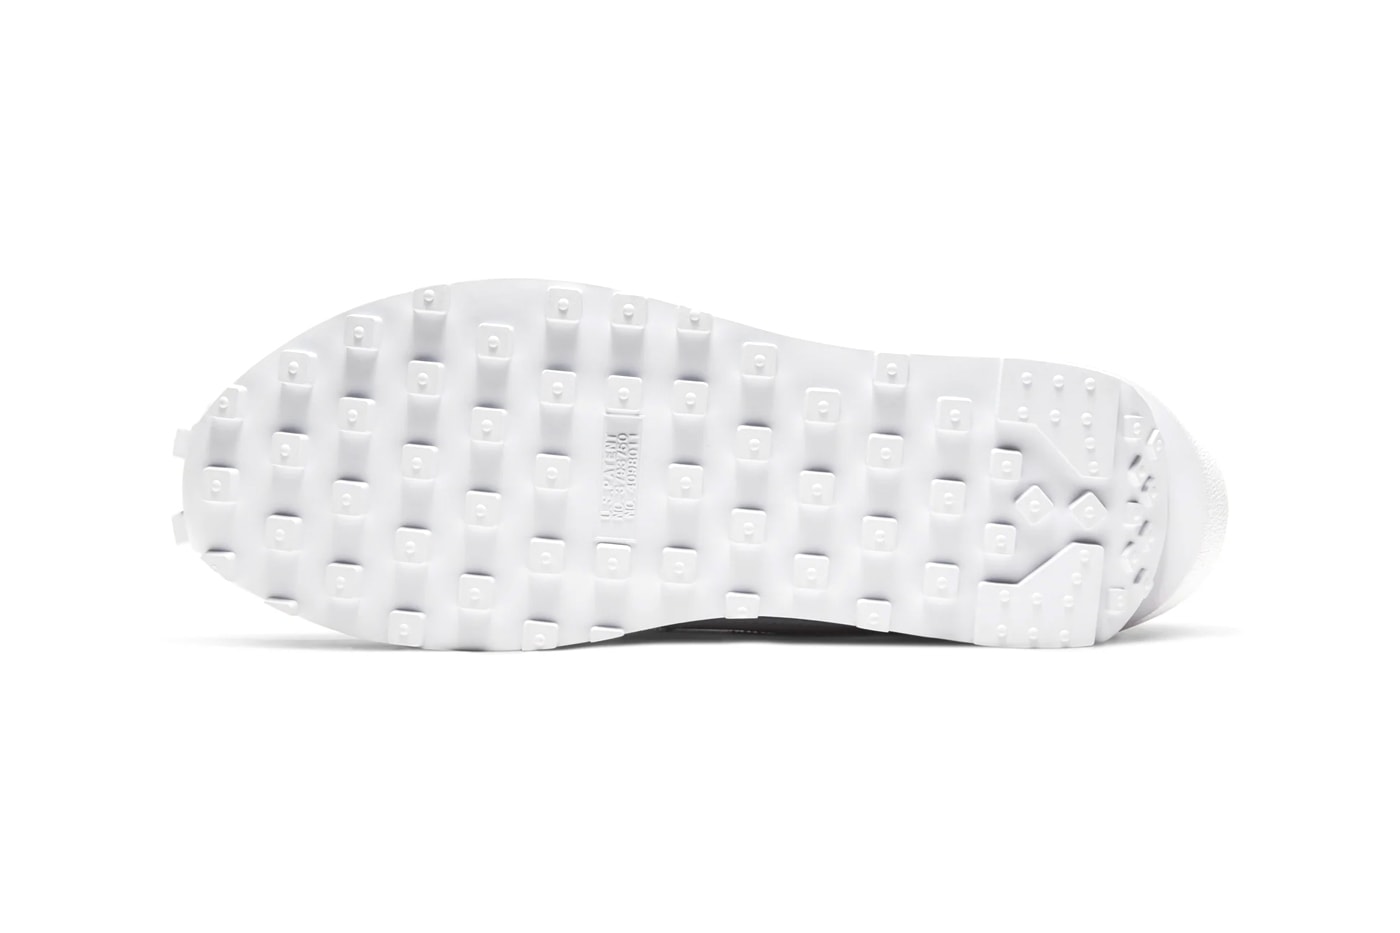 sacai Nike LDV Waffle White Nylon Black Nylon Official Look Release Info Date Buy Price